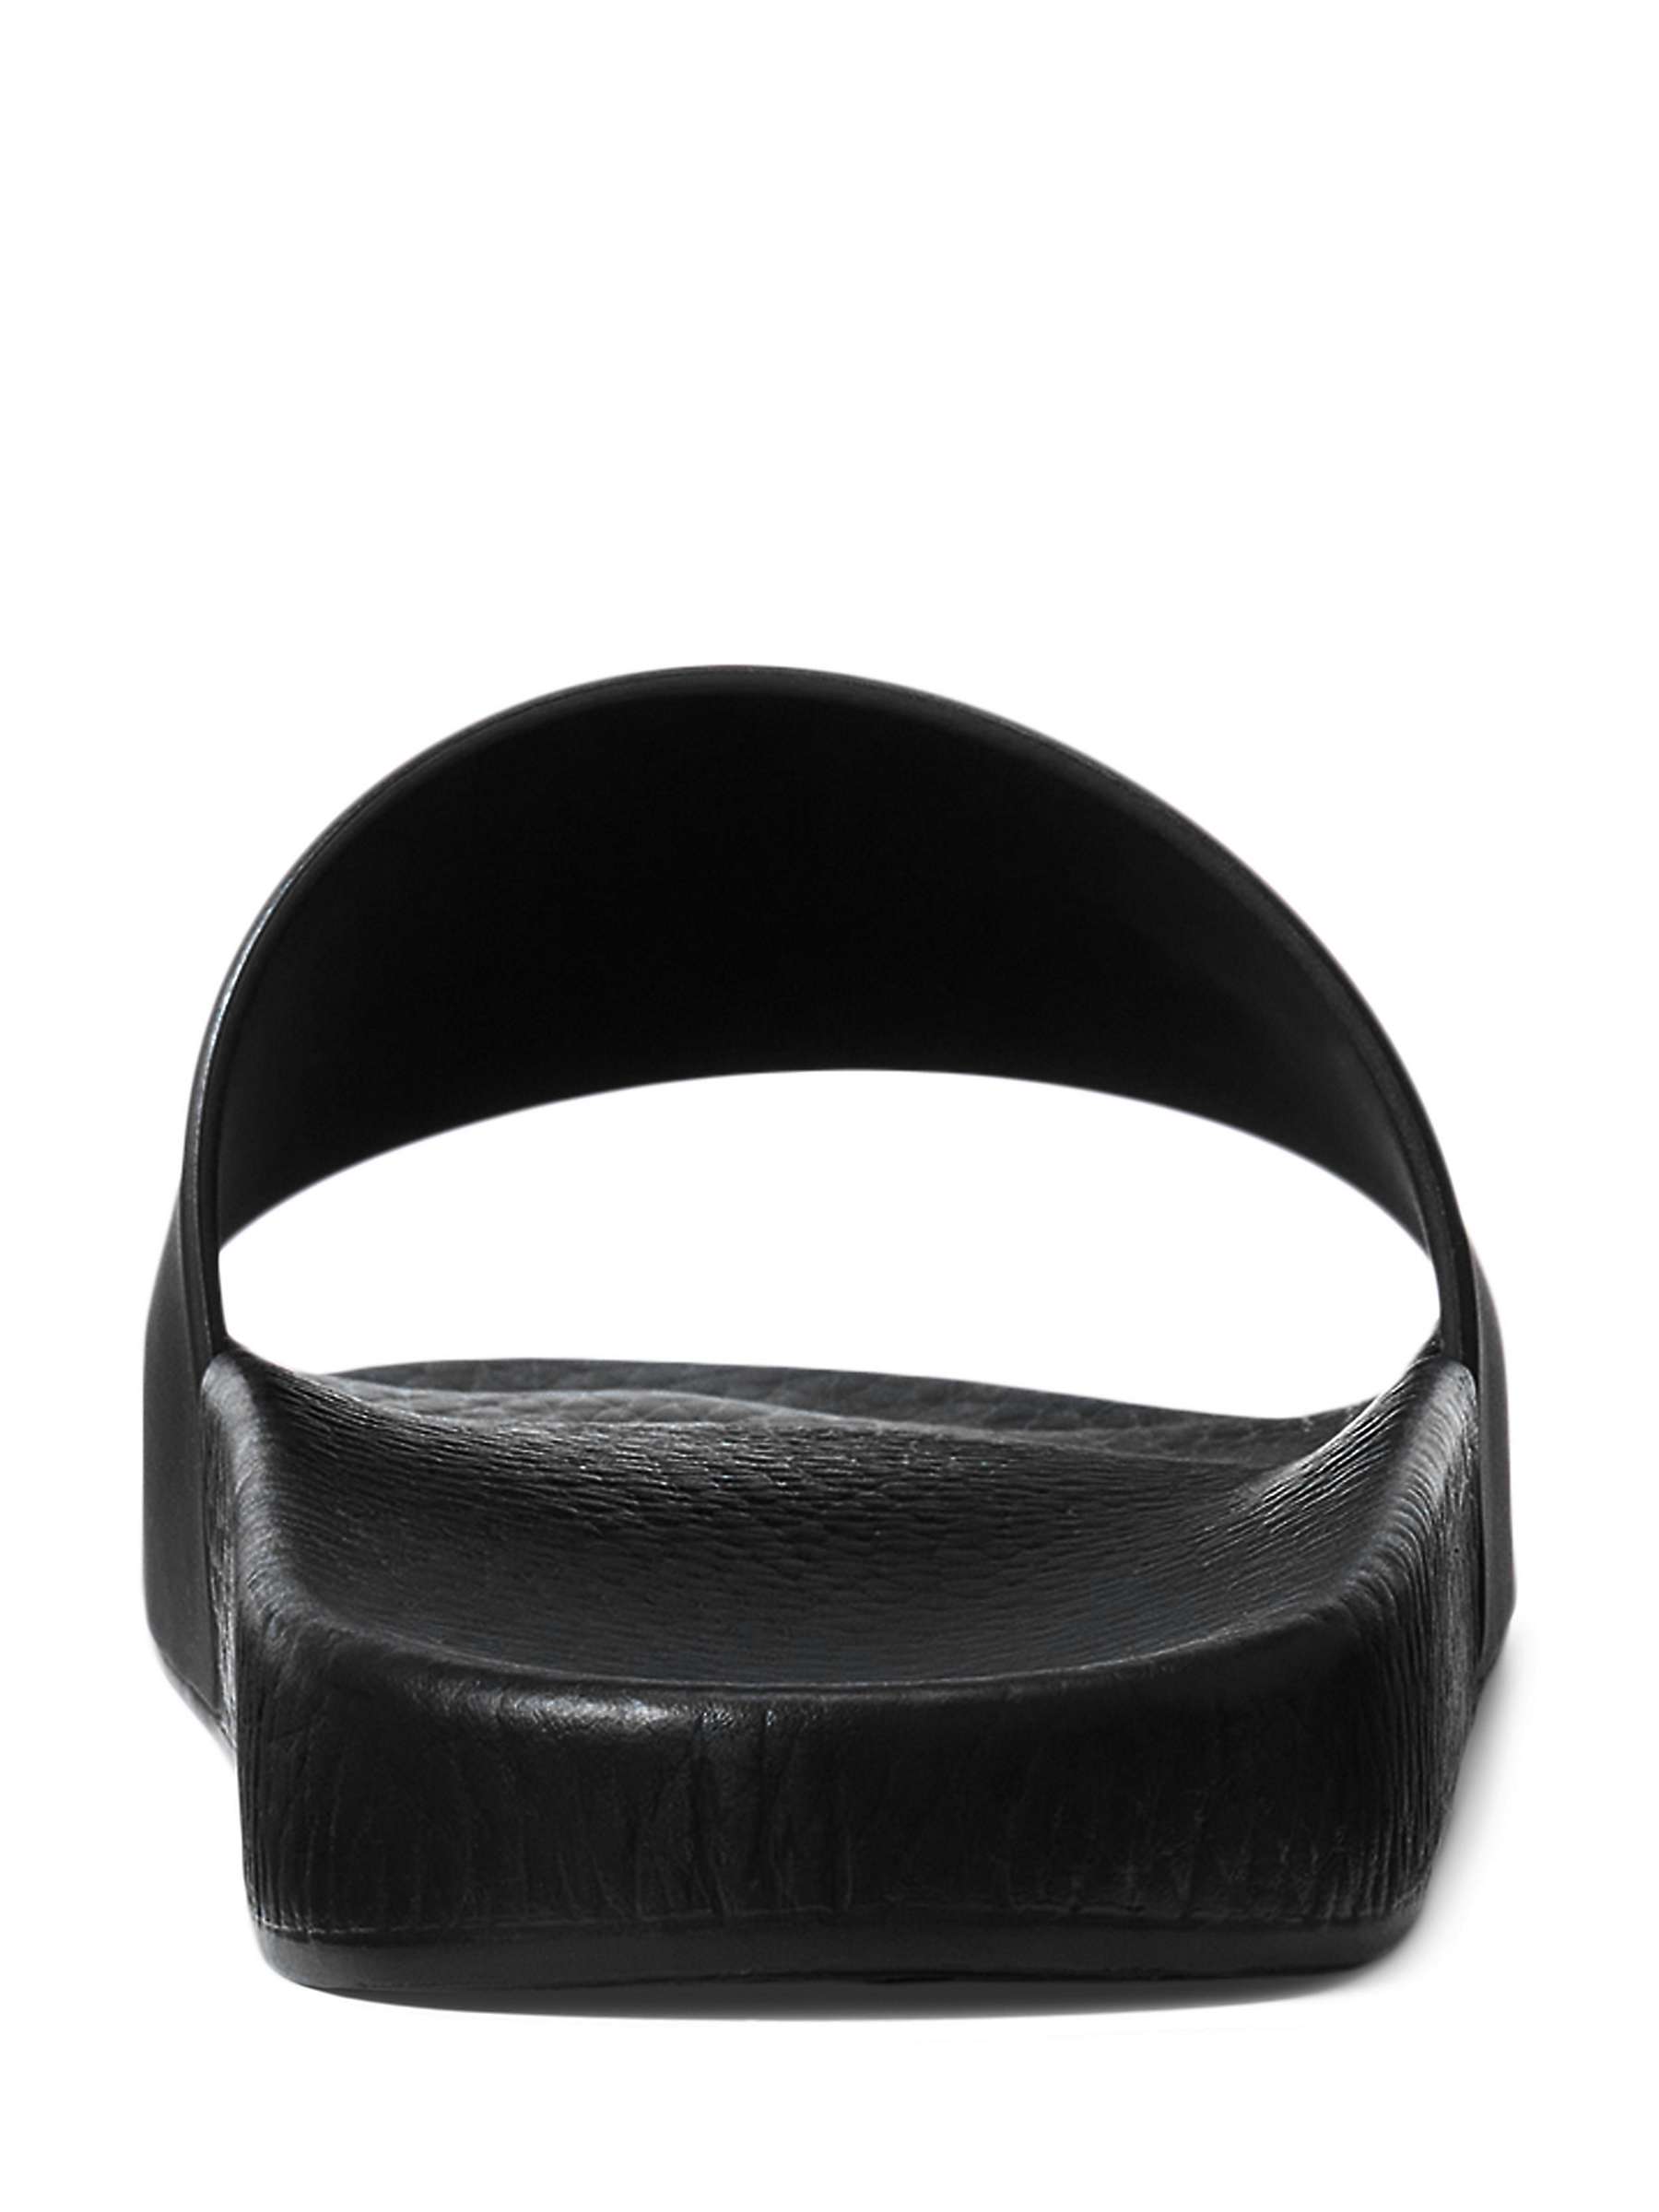 Buy Polo Ralph Lauren Slider Sandals, Black/Red Online at johnlewis.com